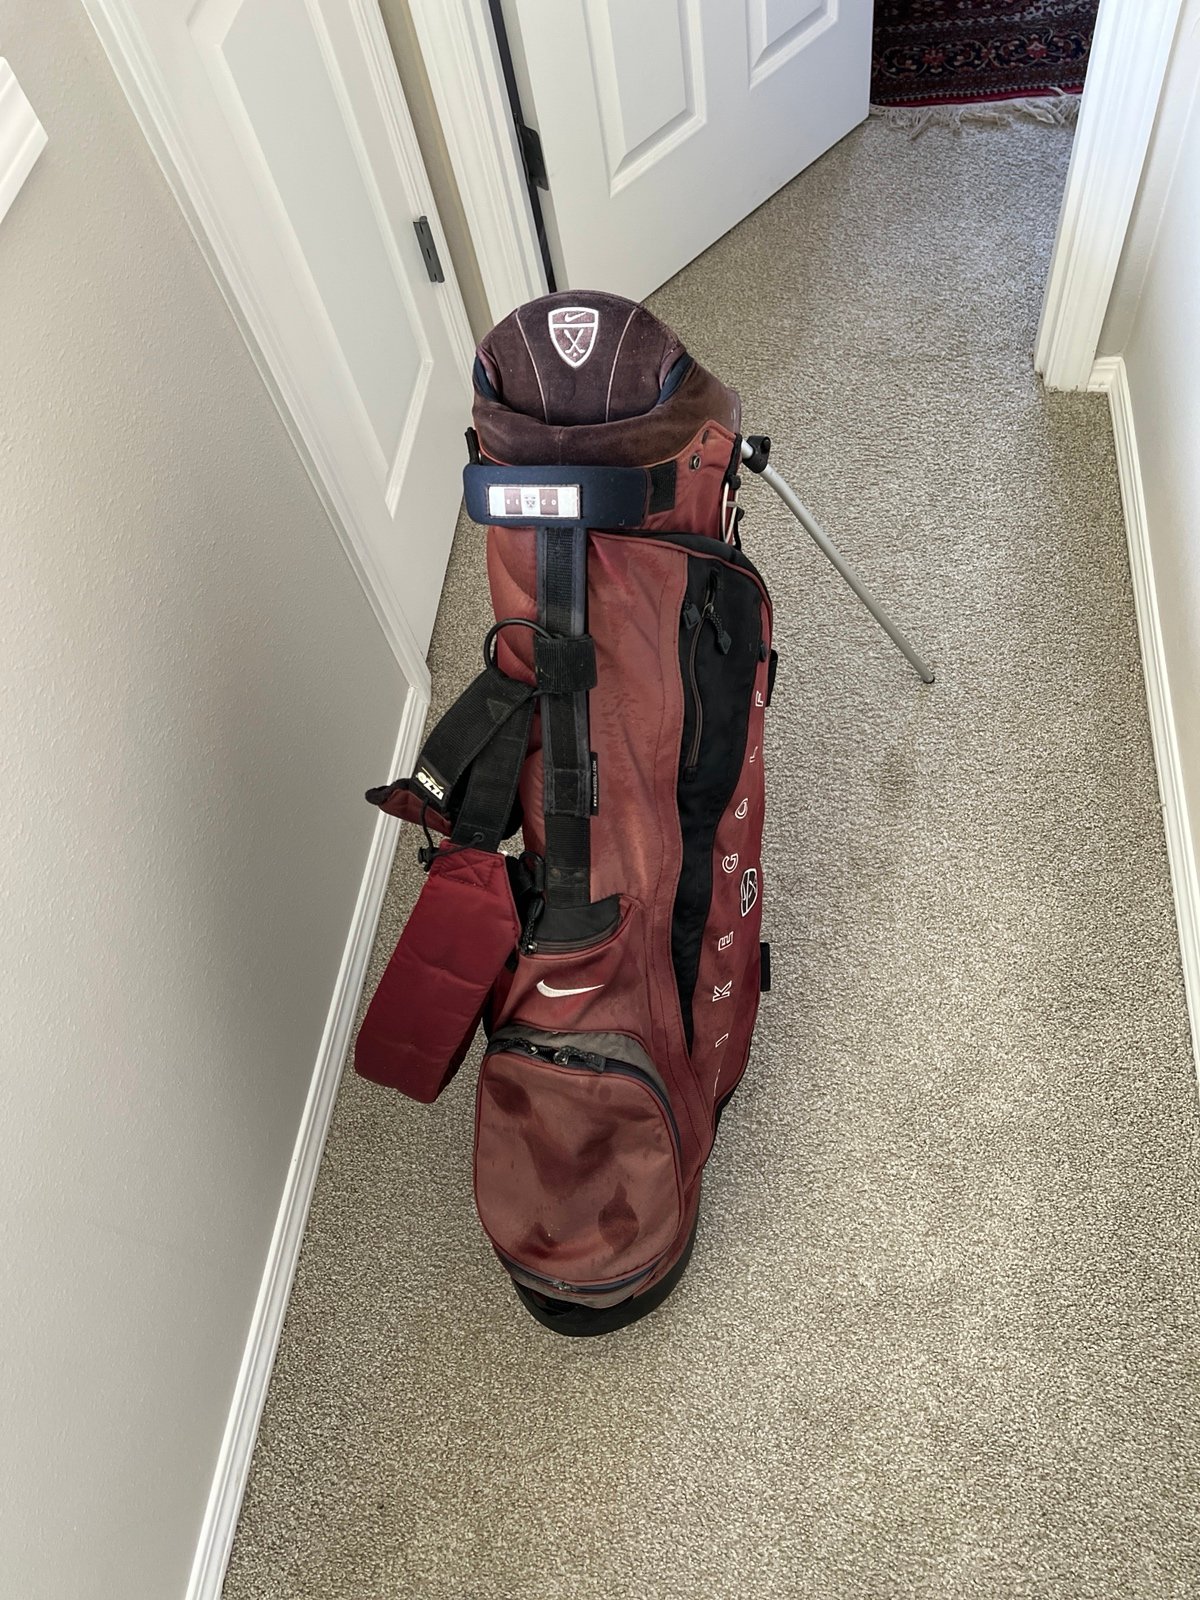 Nike Golf Bag Ozzie Red  Carry/Stand 3wxXoVina